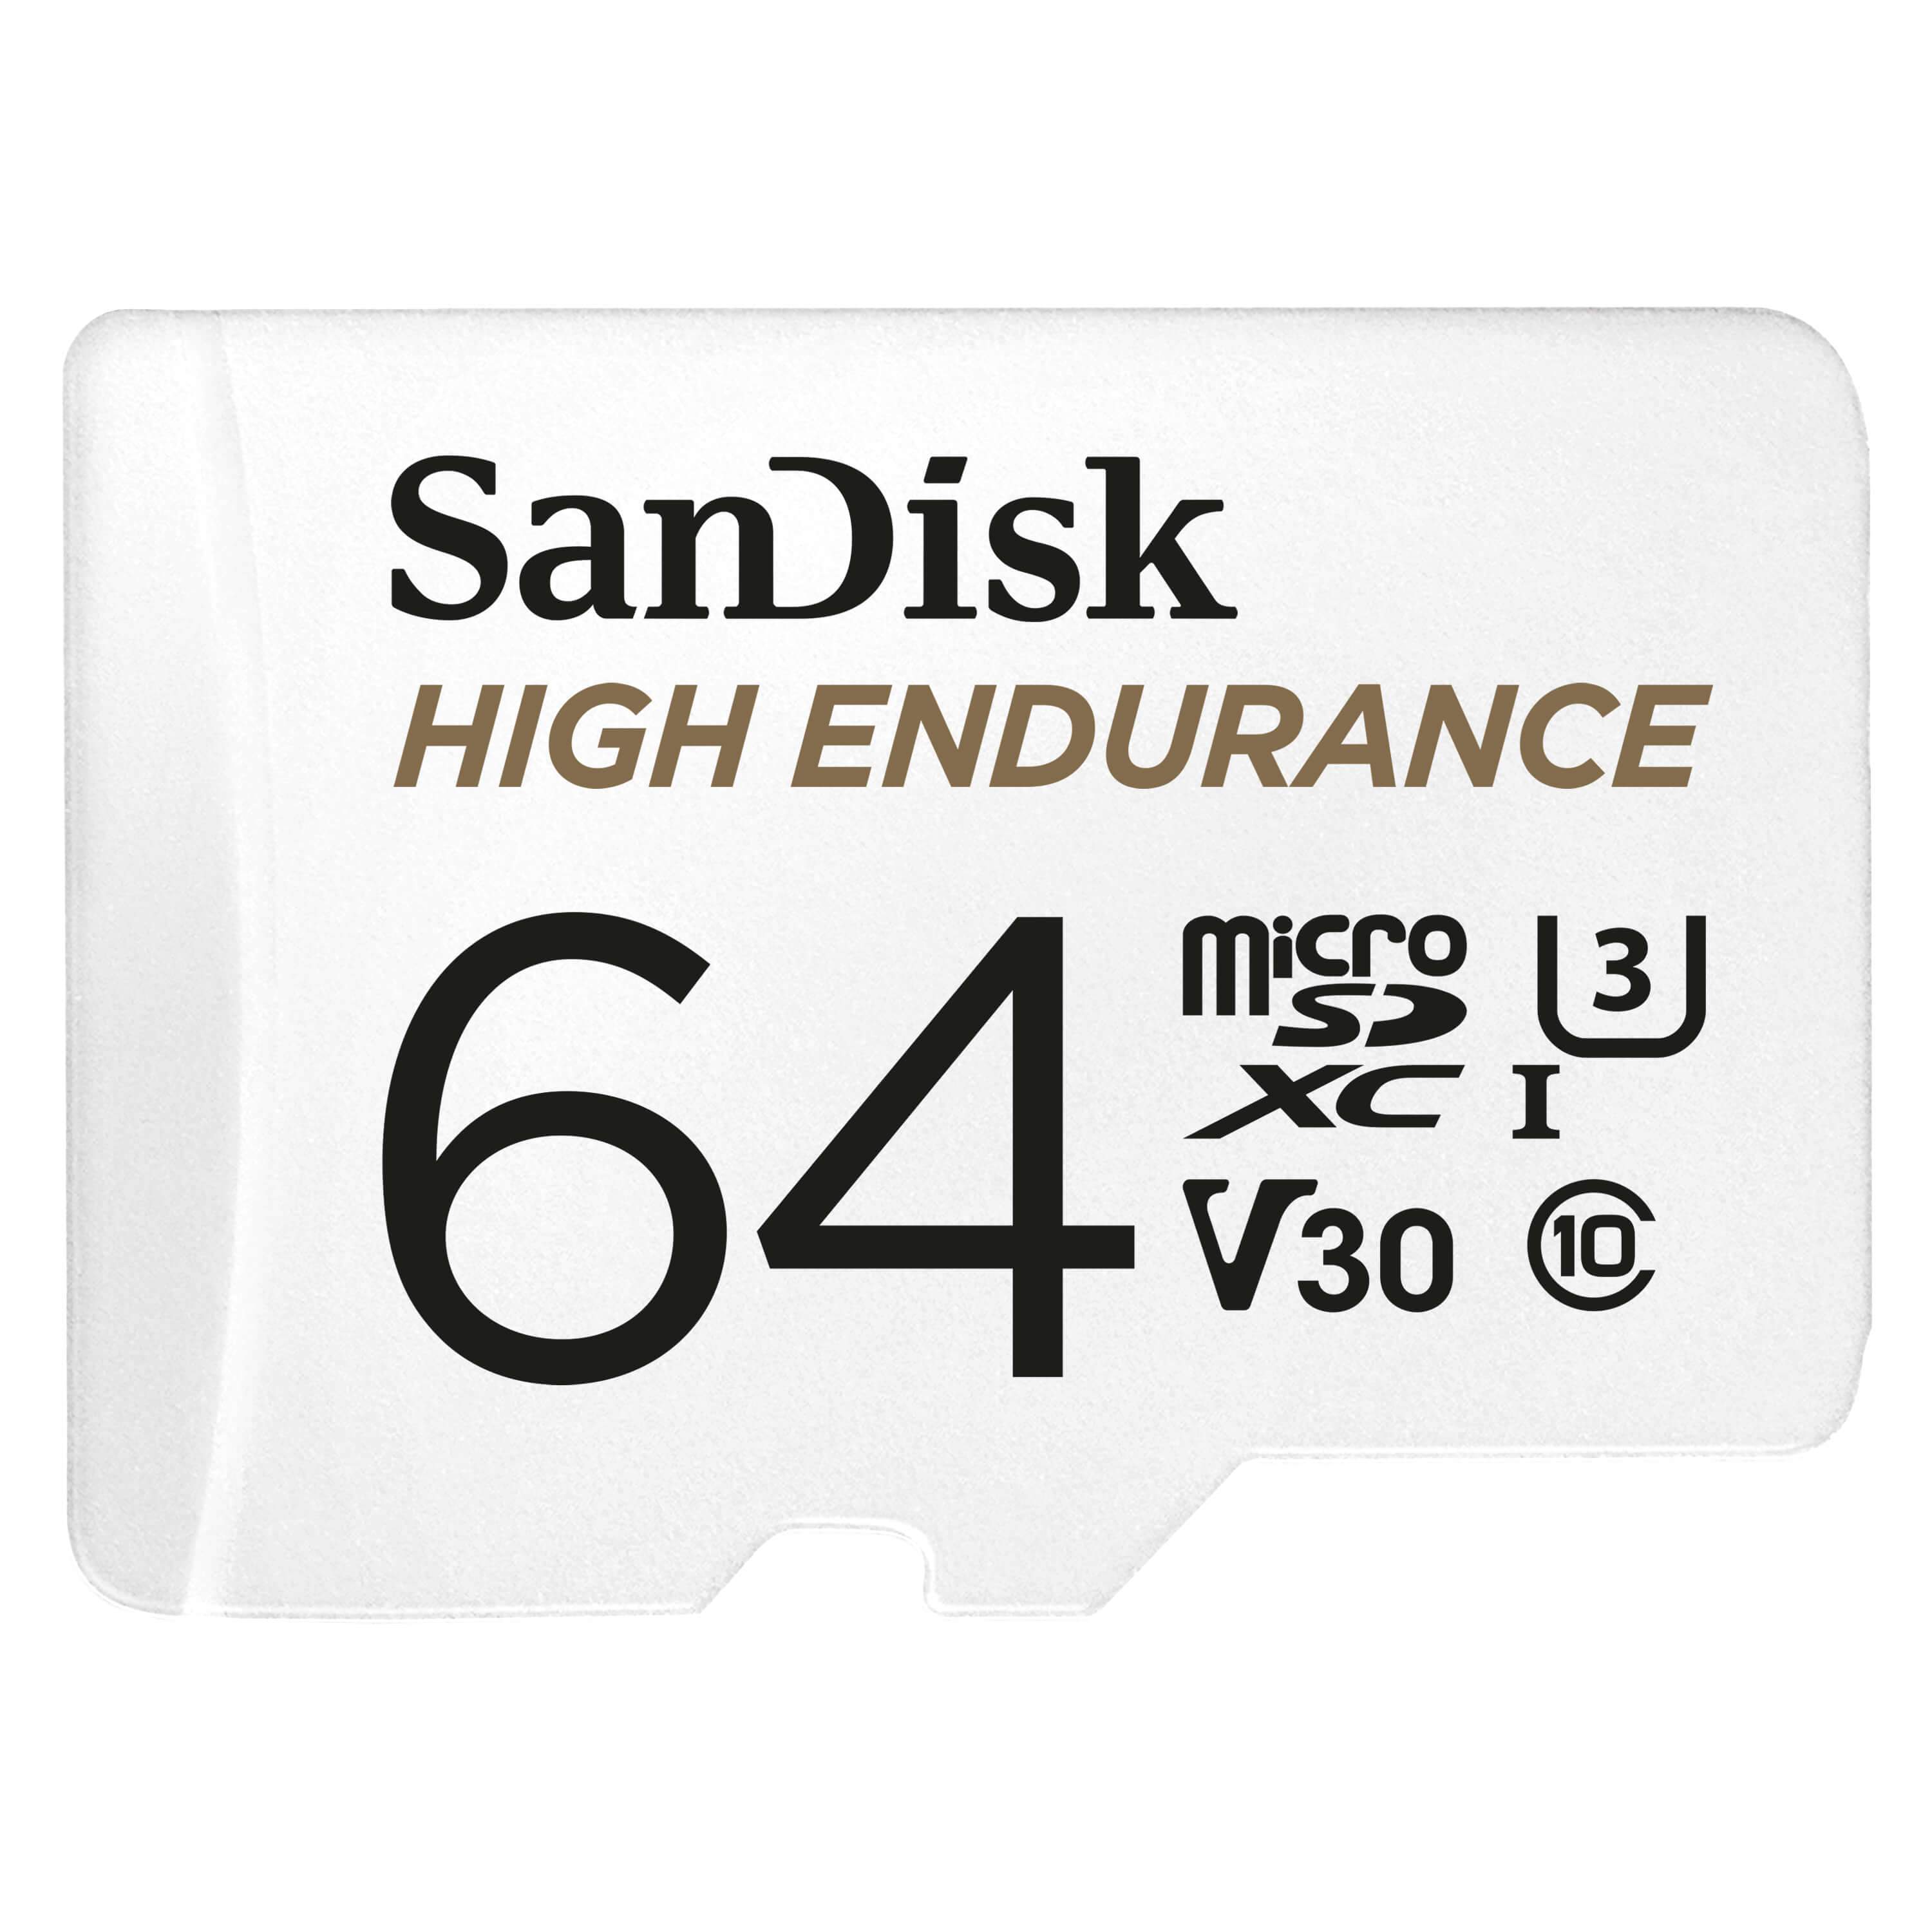 teleurstellen Kleverig Compatibel met Sandisk High Endurance Micro SD-kaart 64GB - VIOFO Benelux